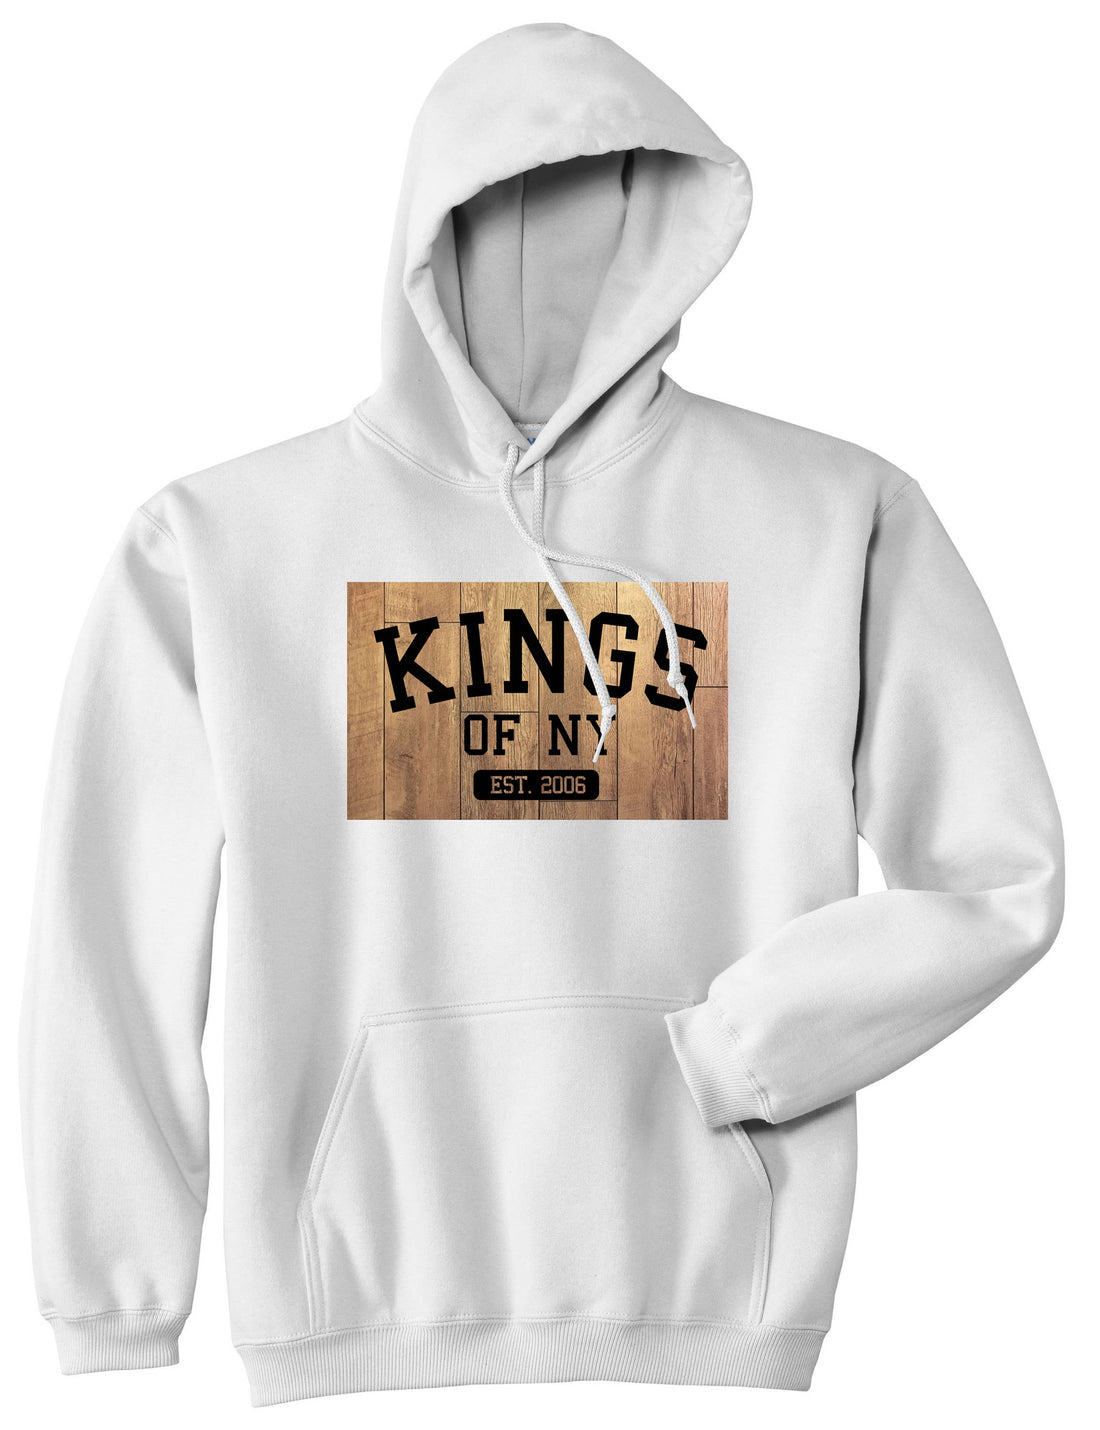 Hardwood Basketball Logo Boys Kids Pullover Hoodie Hoody in White by Kings Of NY